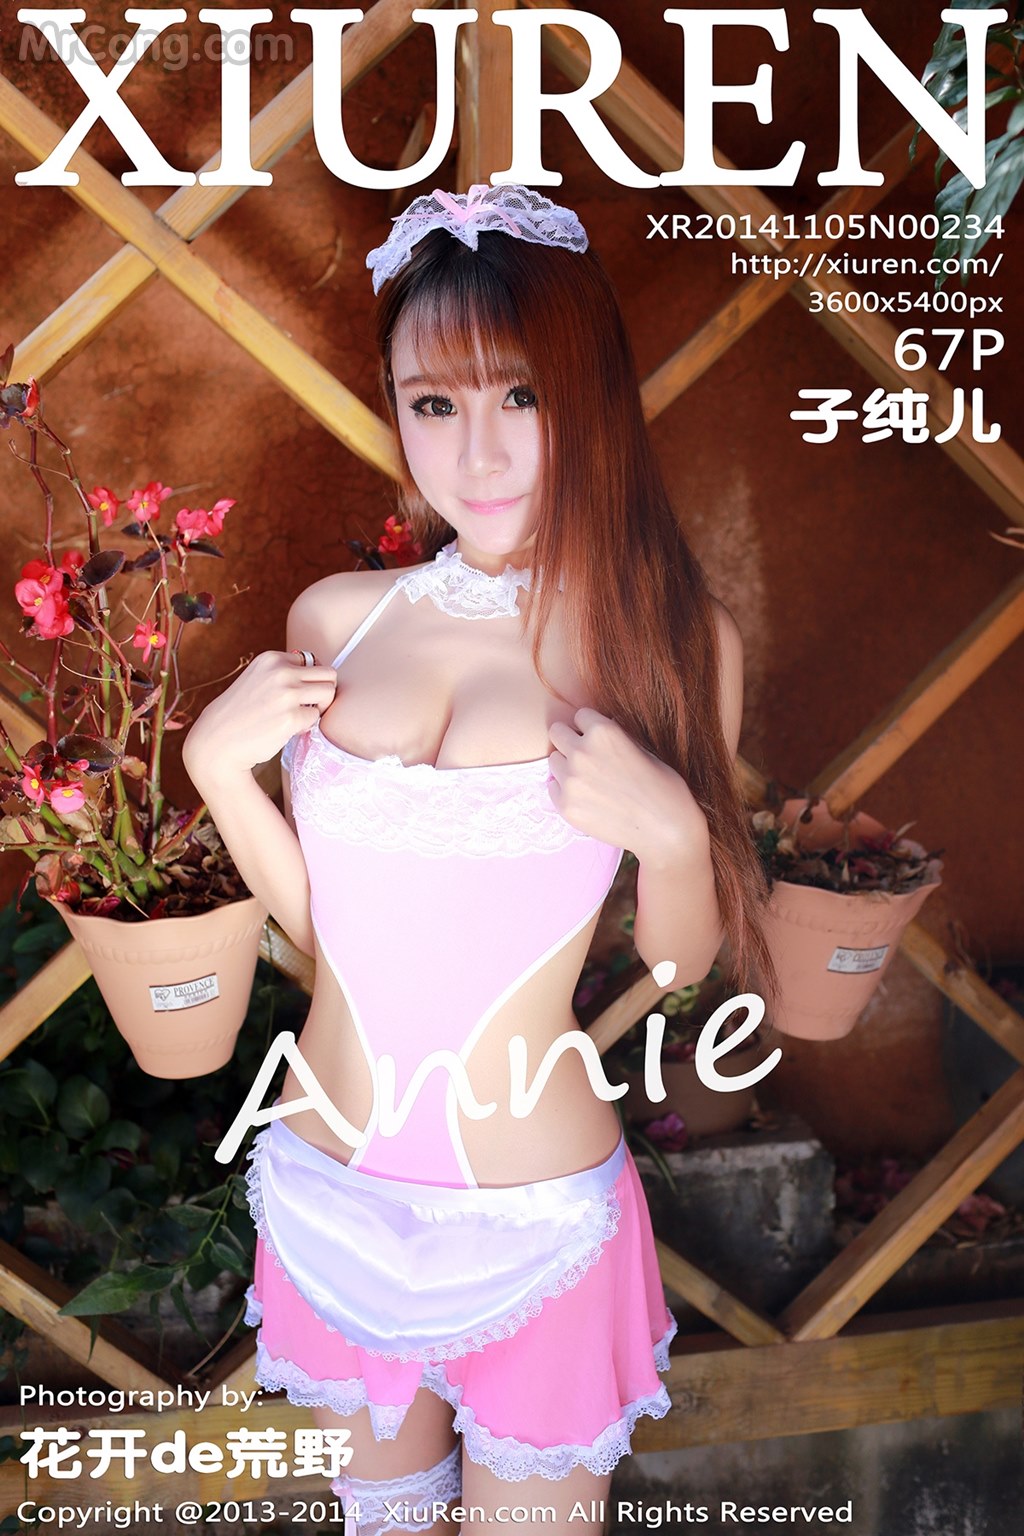 XIUREN No. 2234: Model Annie (子 纯 儿) (68 photos)